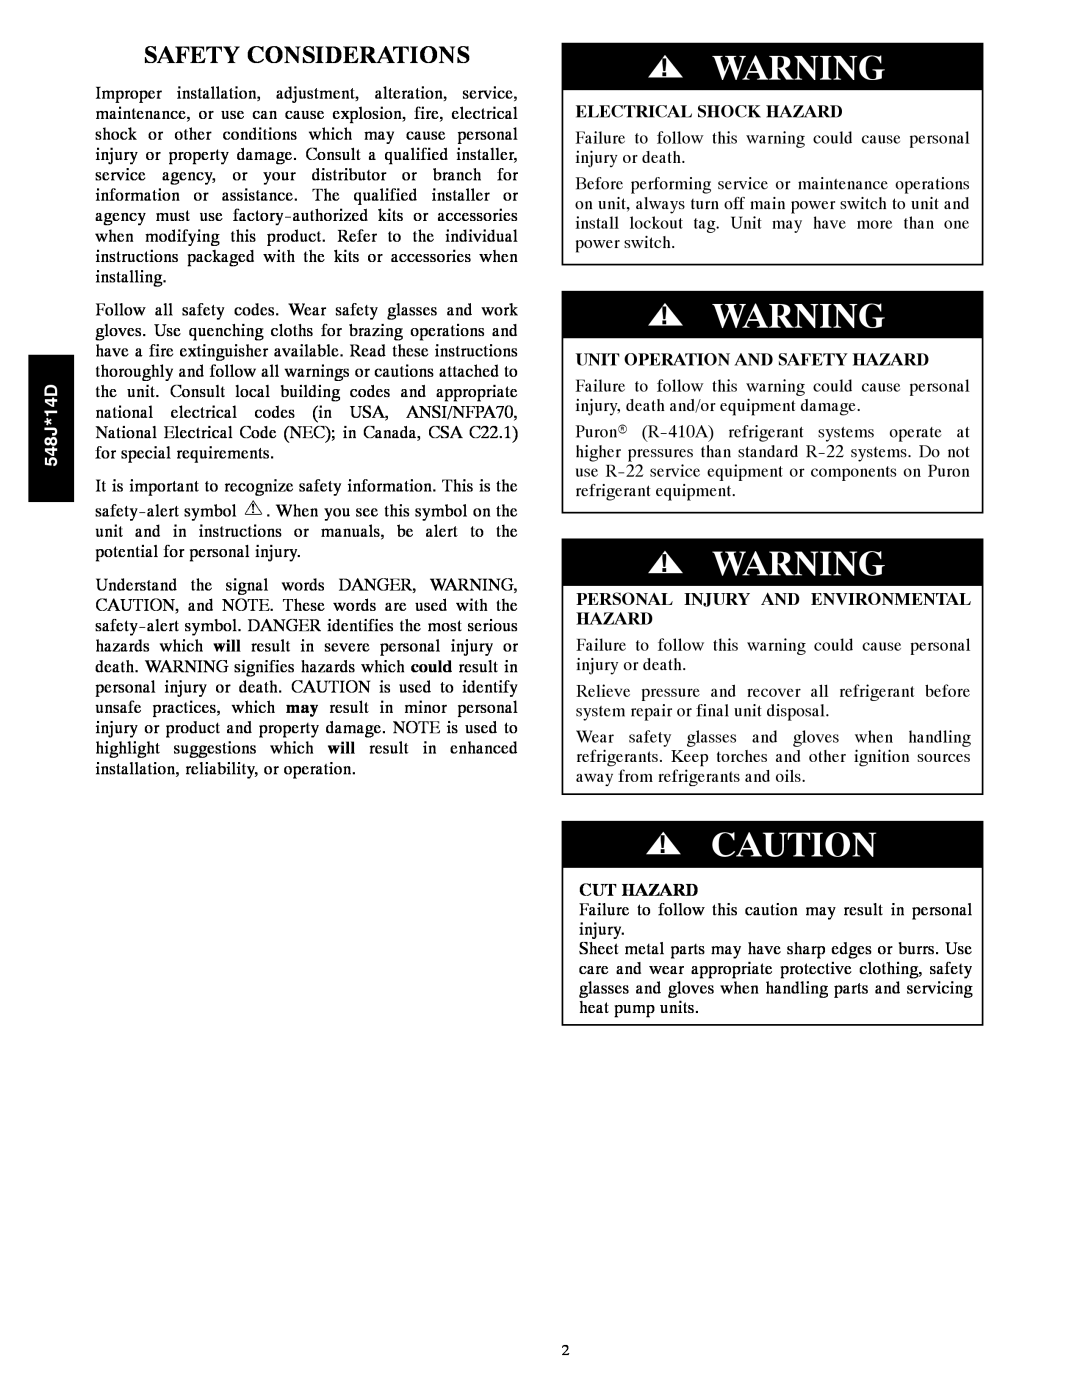 Bryant 548J*14D Safety Considerations, Electrical Shock Hazard, Unit Operation And Safety Hazard, Cut Hazard 